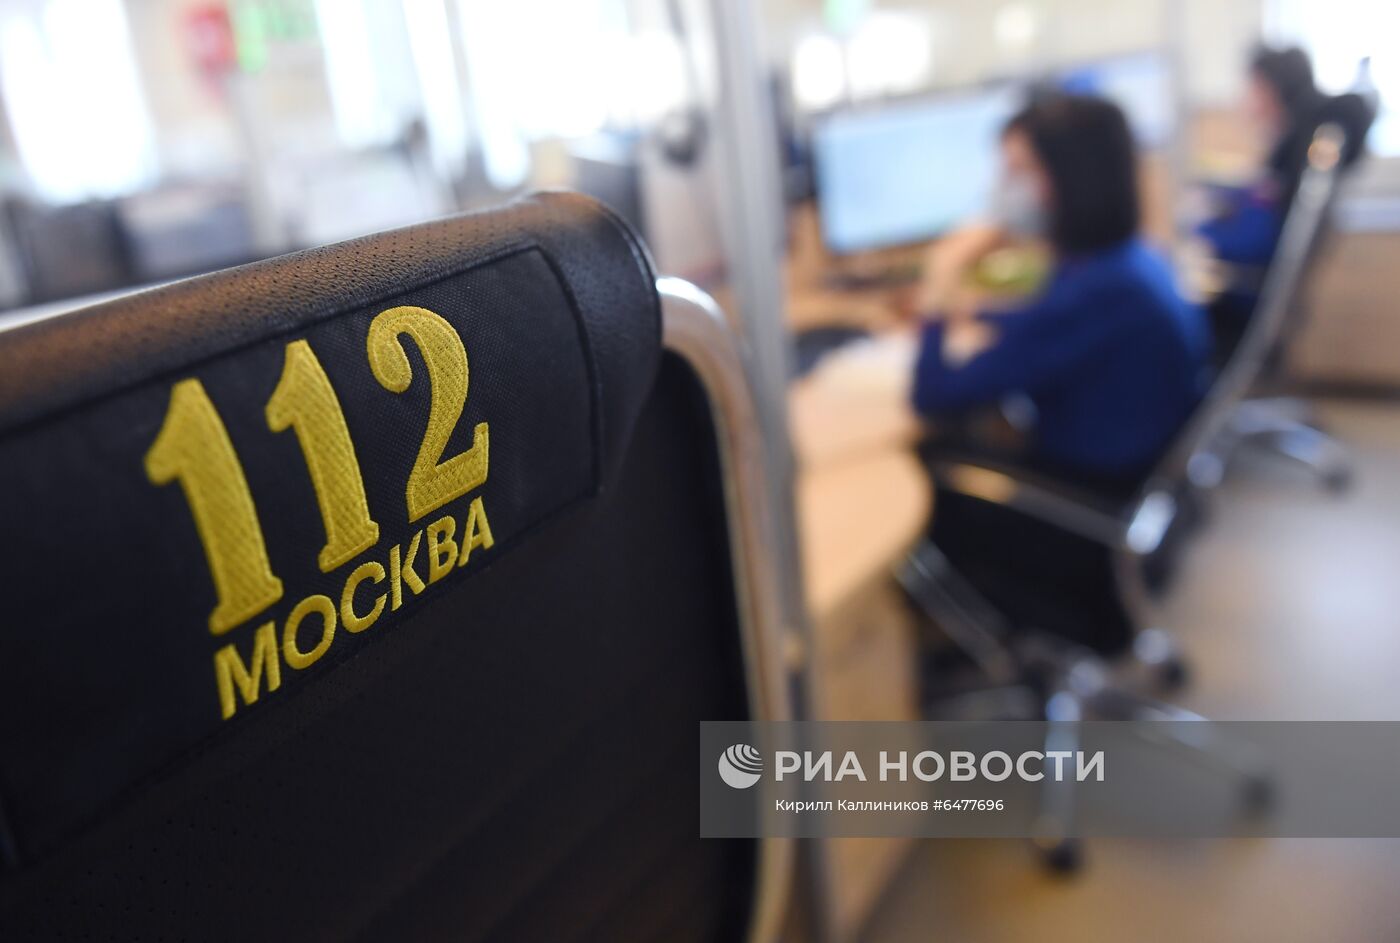 Работа Службы 112 Москвы